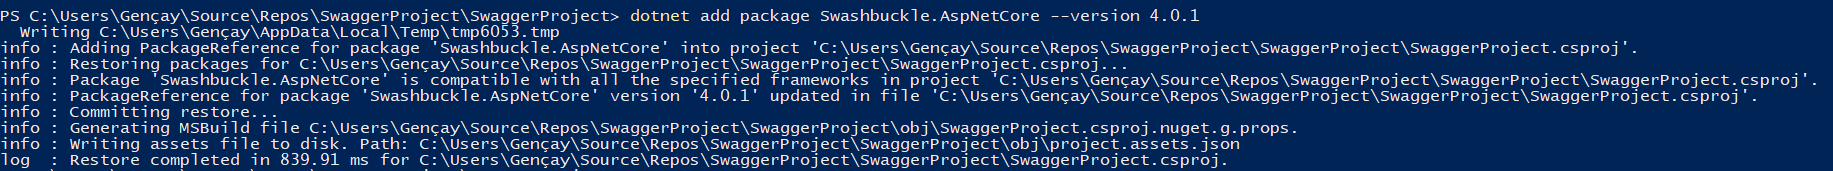 Asp.NET Core - Swagger Aracı